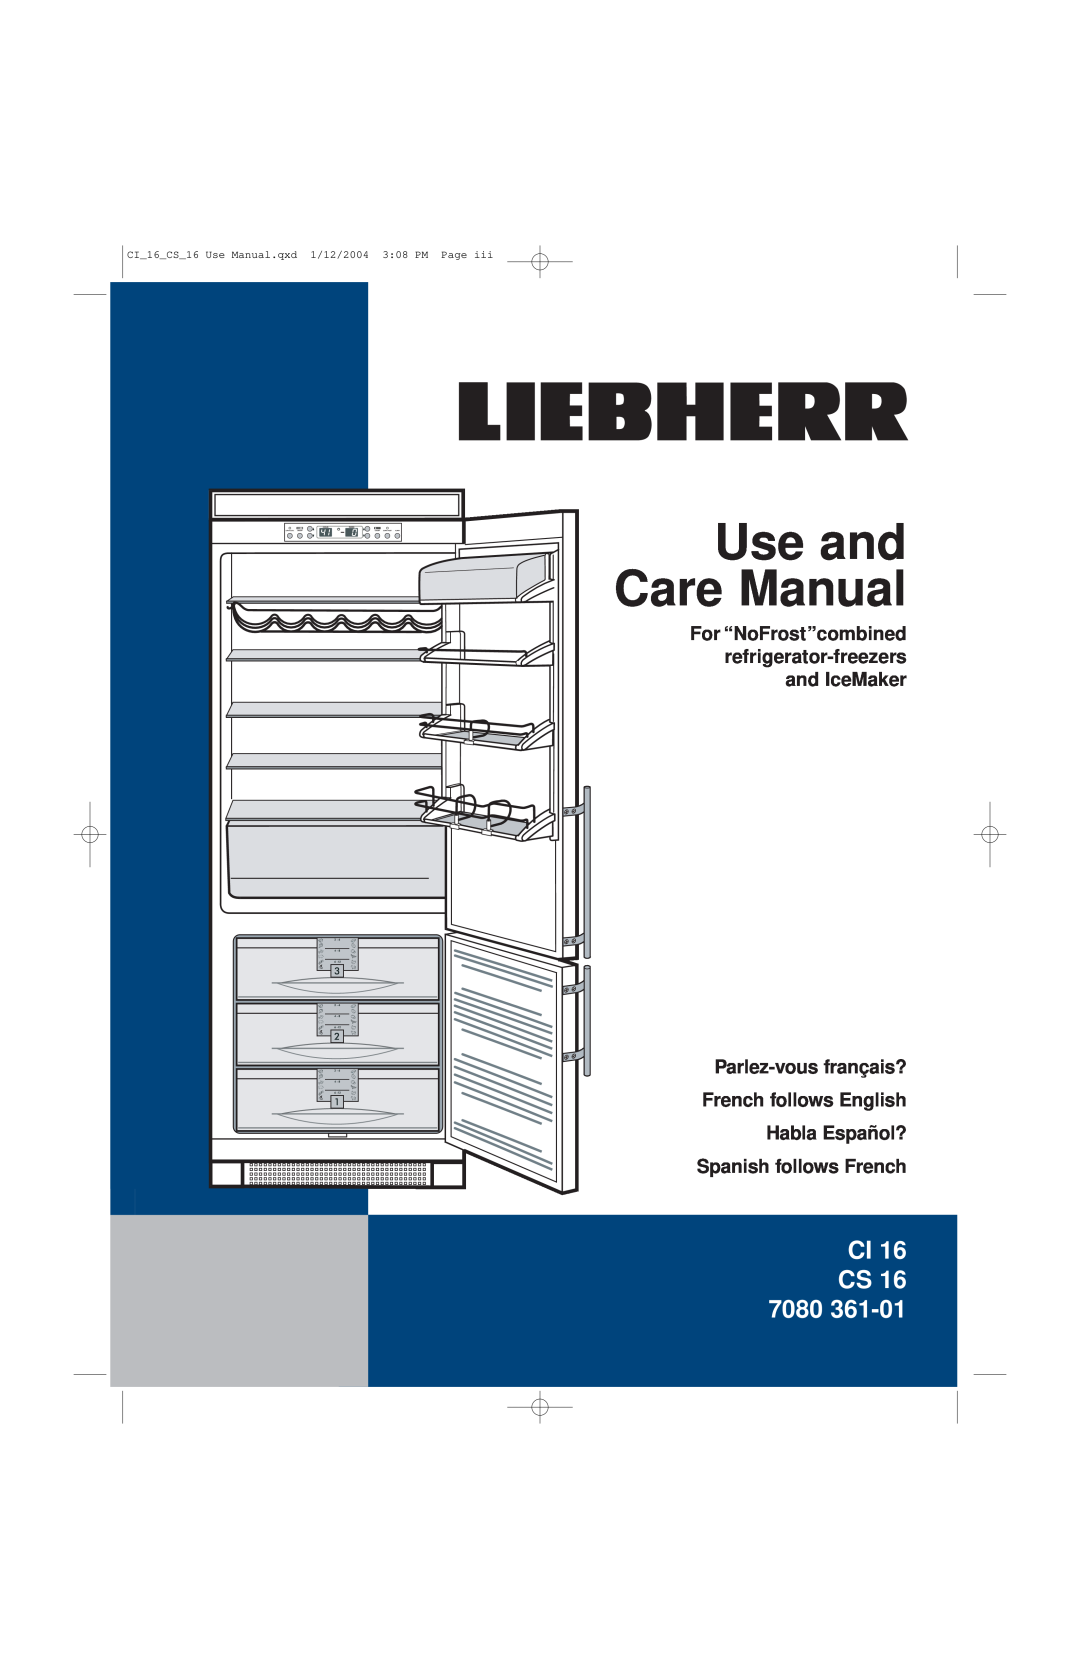 Liebherr CS16, CI16, C16, 7080 361-03 manual Use and Care Manual, C Ci Cs 